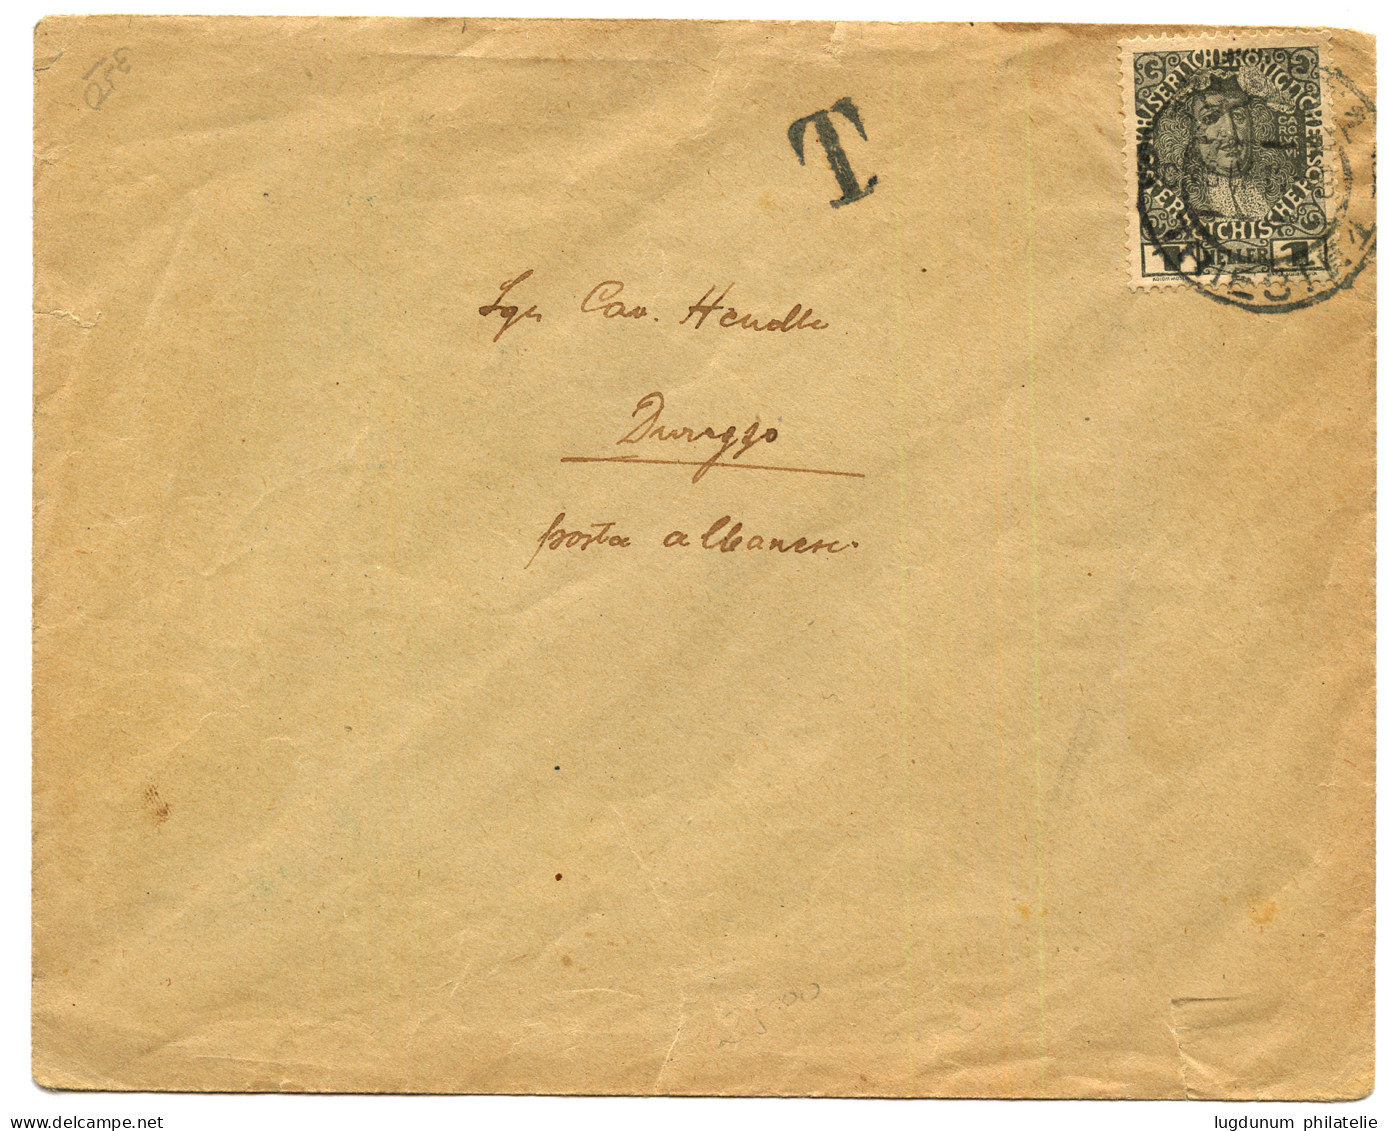 ALBANIA : 1914 AUSTRIA 1h Canc. TRIESTE + "T" Tax Marking On Envelope (PRINTED MATTER Rate) On Envelope To DURAZZO Taxed - Albanië